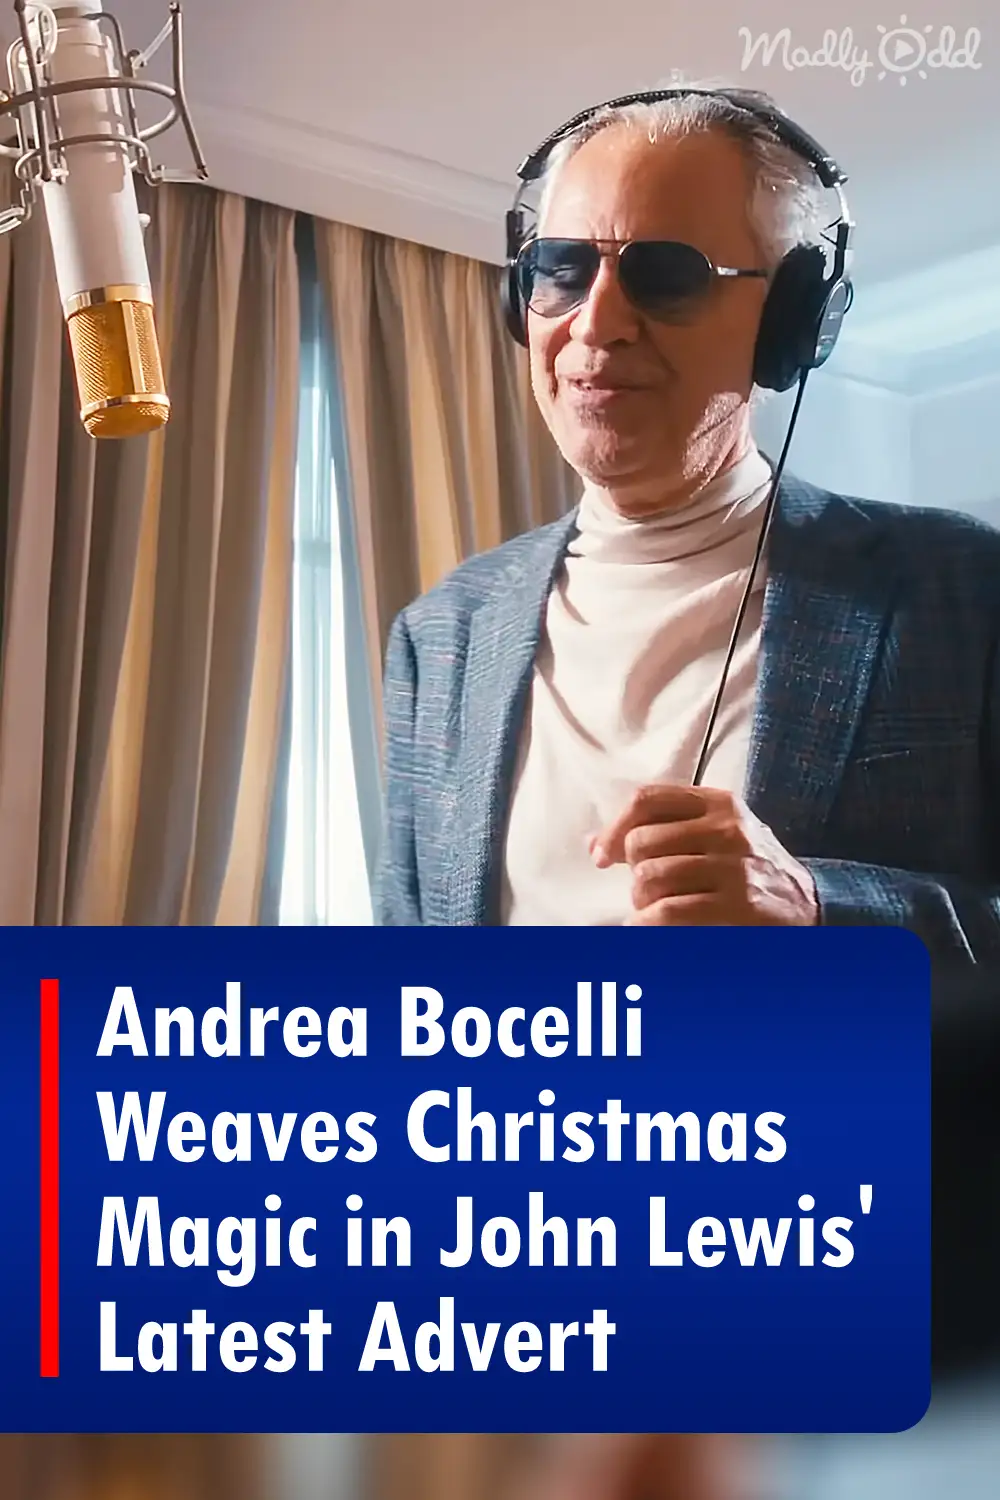 John Lewis Christmas ad singer Andrea Bocelli's family life